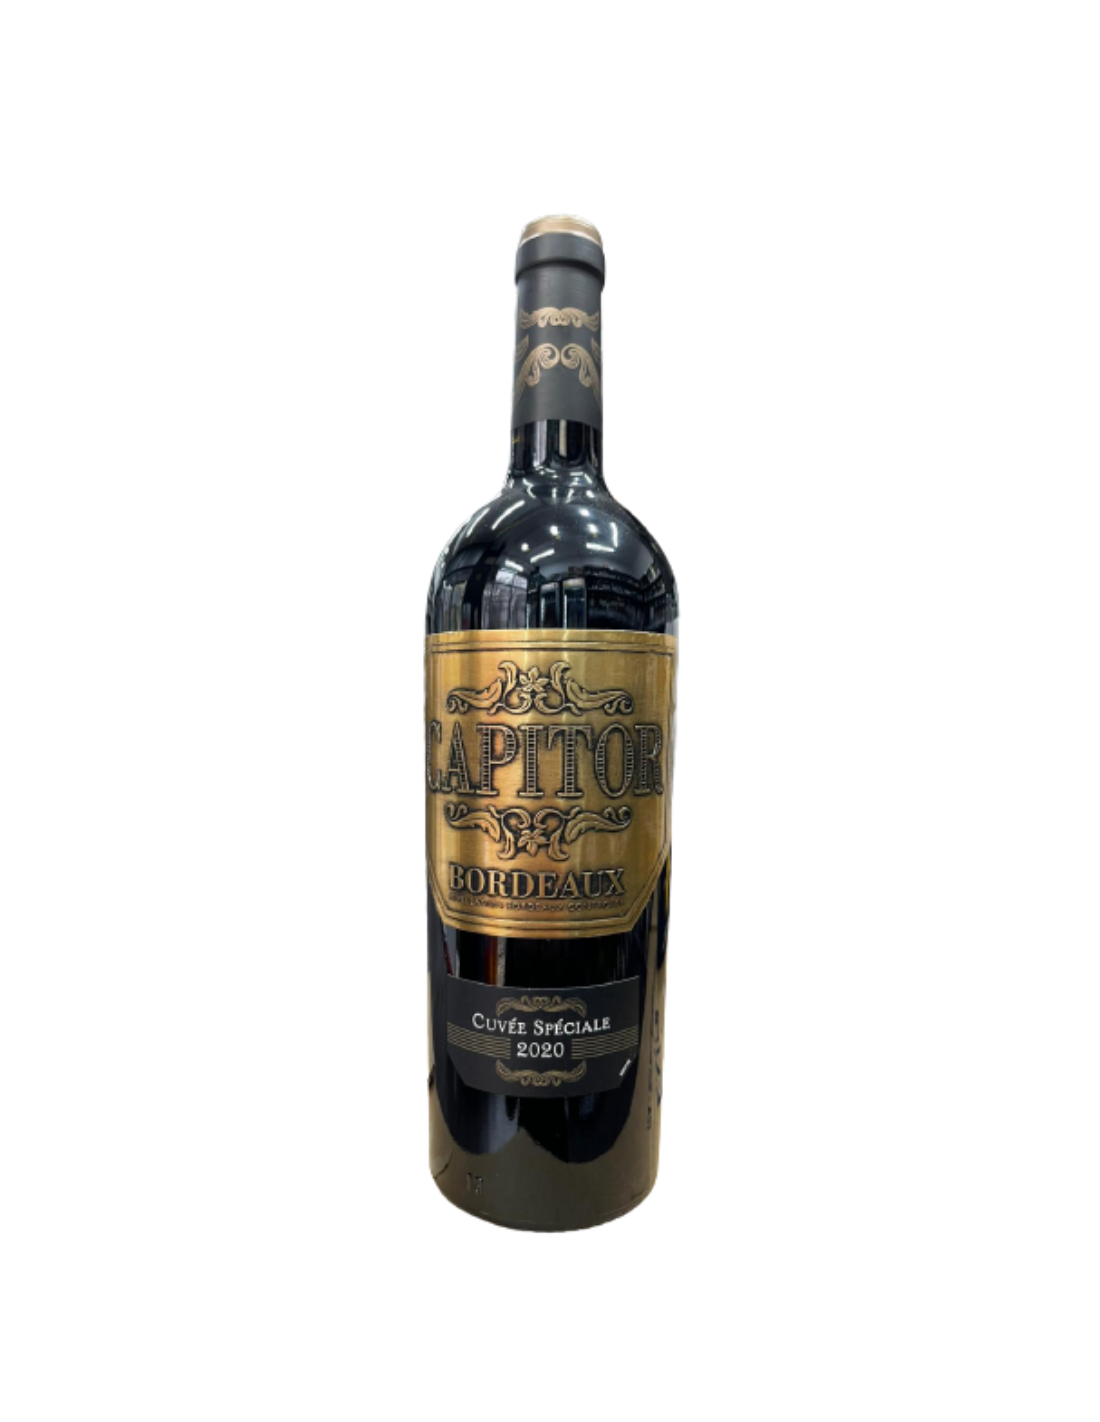 Vin rosu sec, Capitor Bordeaux Cuvée Spéciale 2020, 0.75L, 13% alc., Franta alcooldiscount.ro